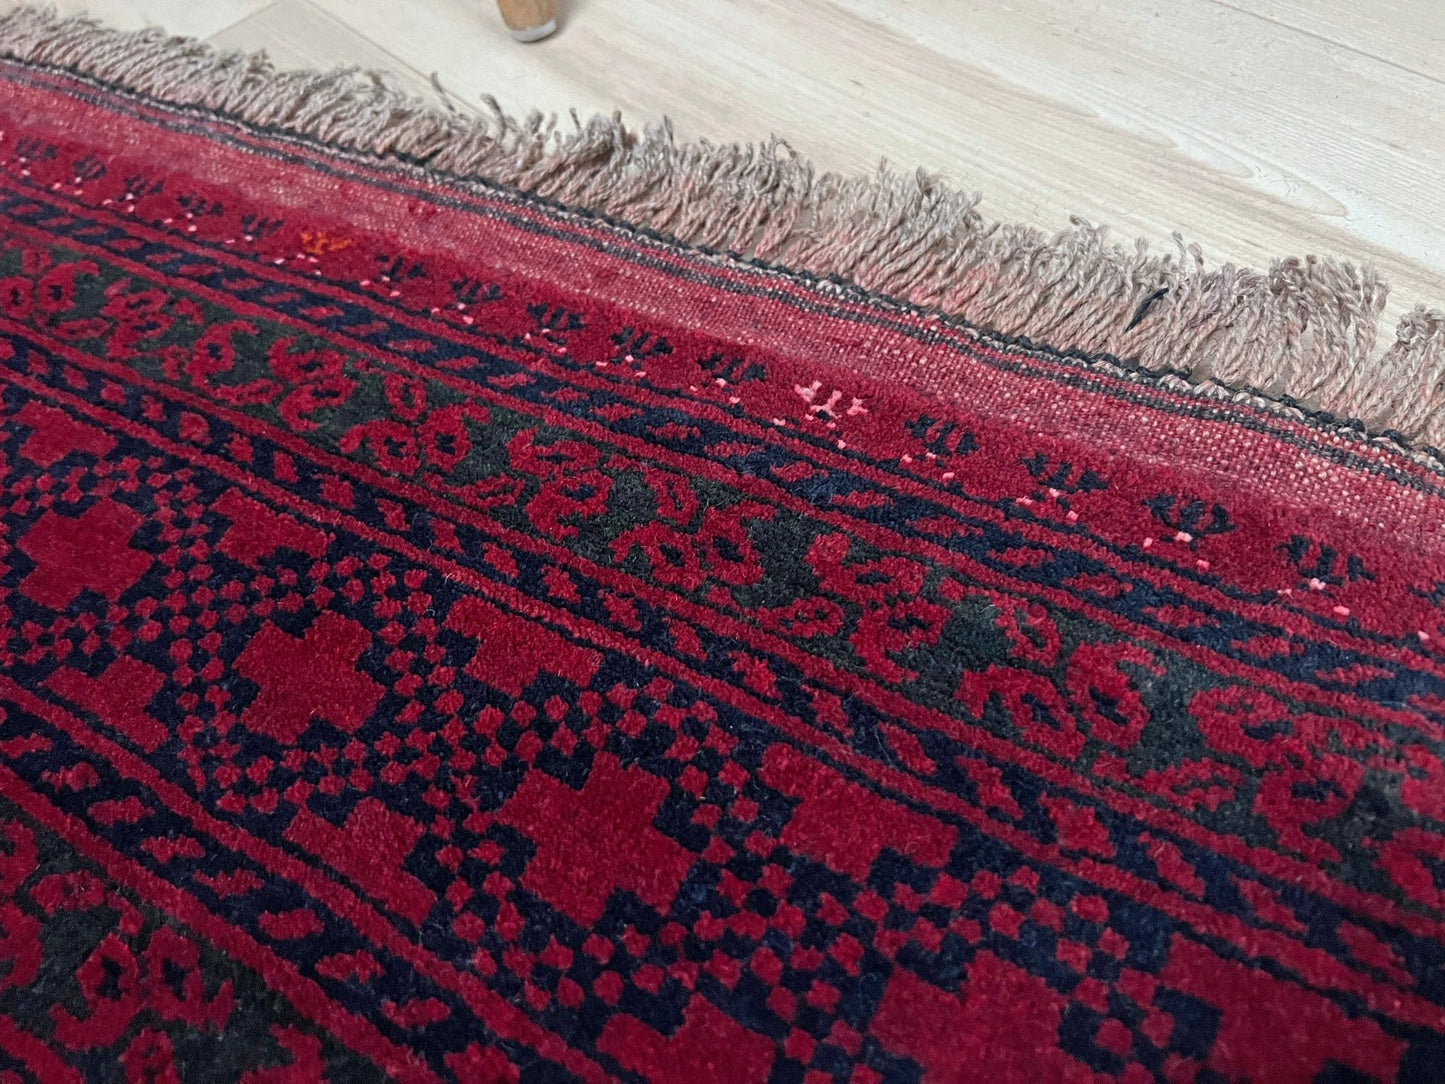 Ersari elephant foot turkmen rug. Oriental rug shop san francisco bay area. 6x8 burgundy rug. Buy handmade rug online